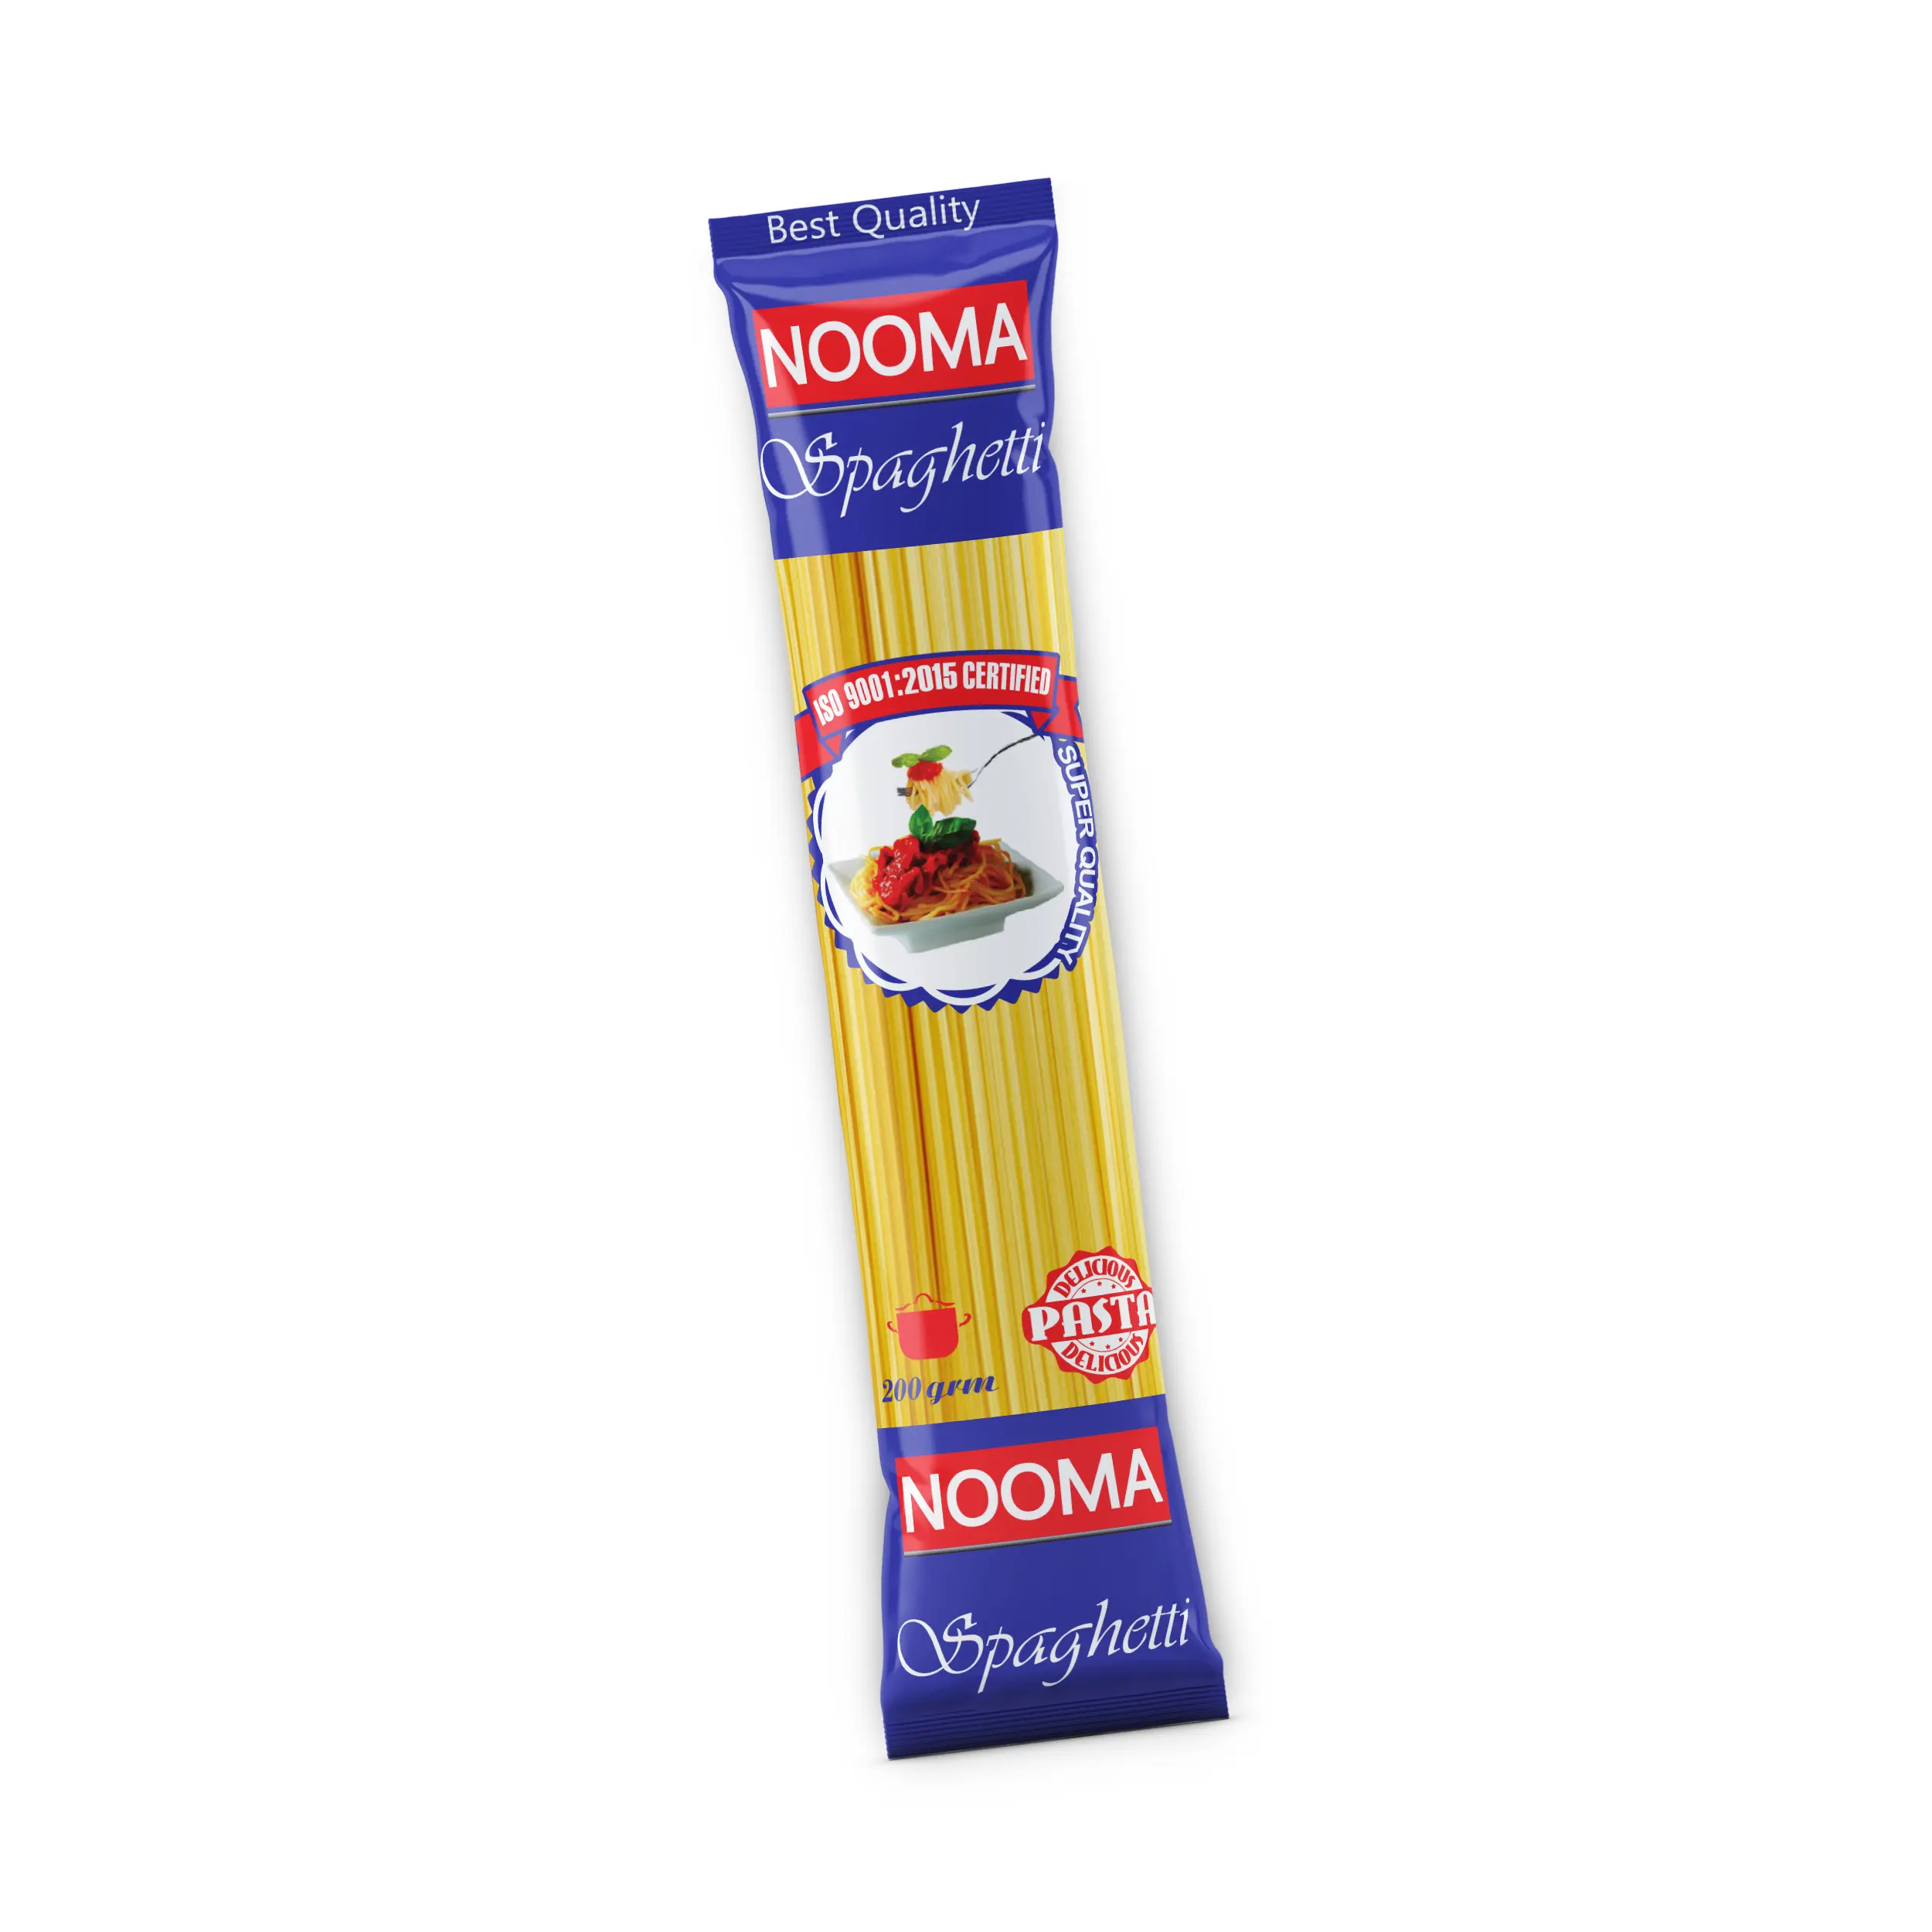 Spaghetti Pasta с Private Label, Hard Wheat, Nooma Brand, Made в Egypt, Free Samples, 200 г